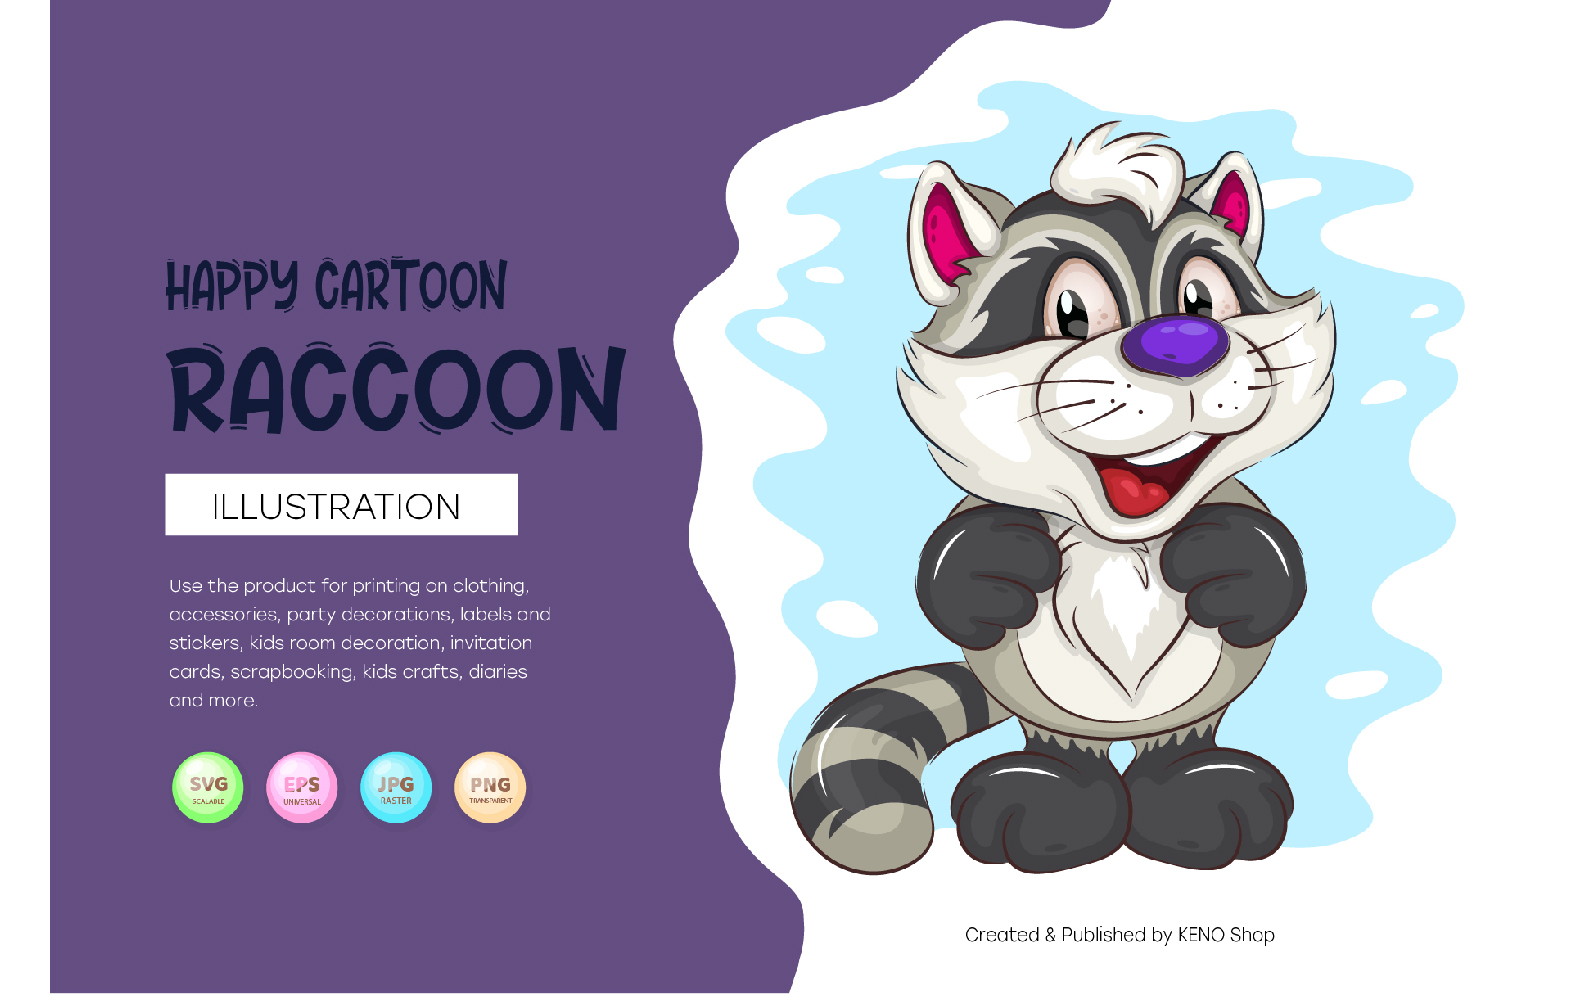 Happy Cartoon Raccoon. T-Shirt, PNG, SVG.